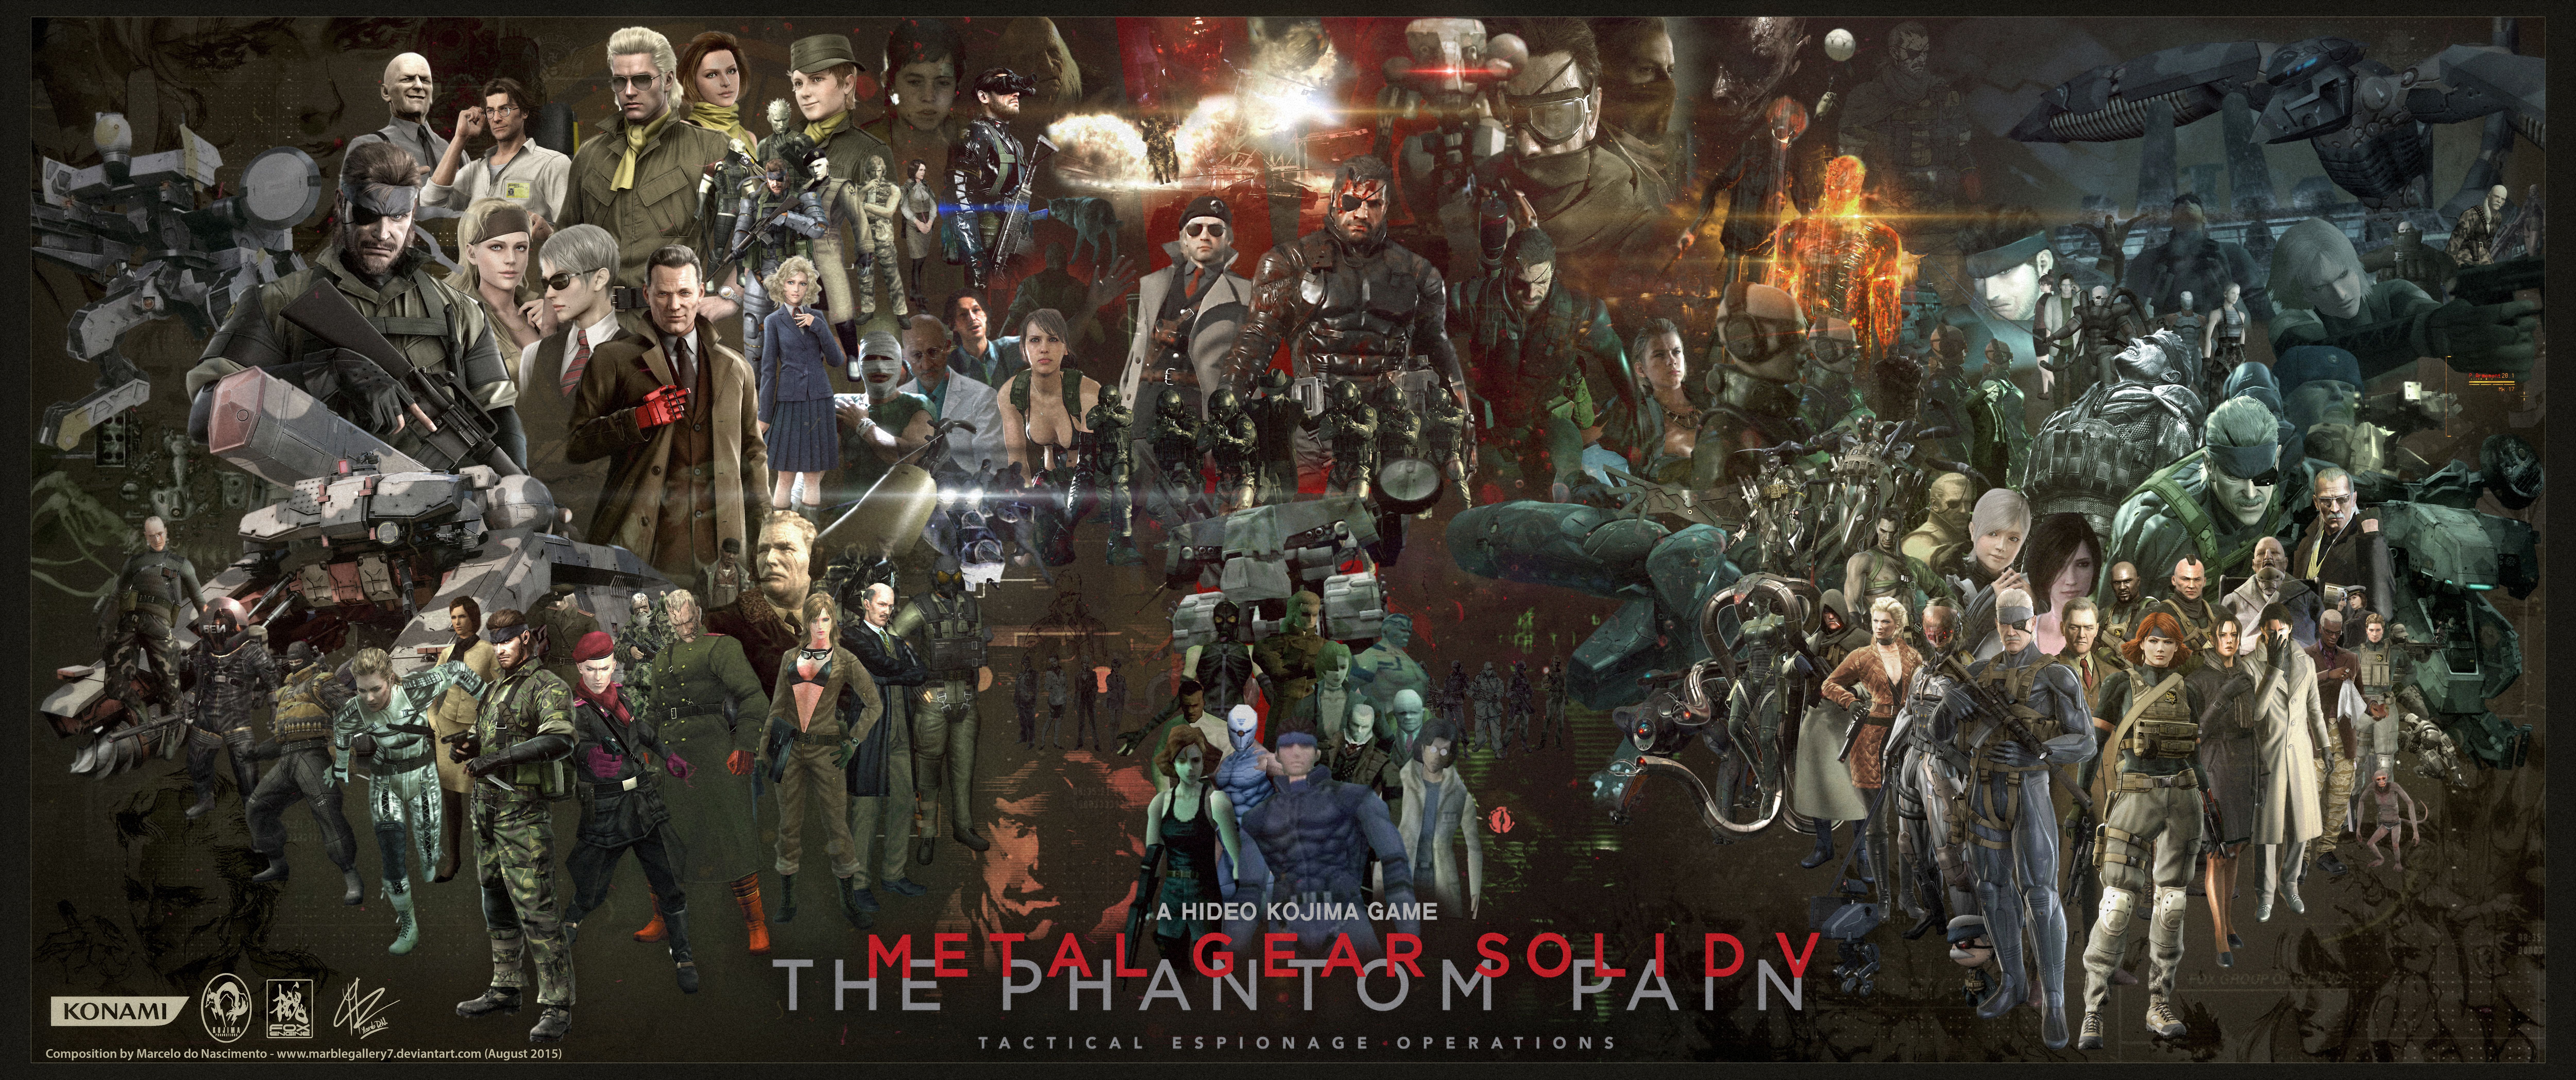 Metal Gear 5 Wallpapers On Wallpaperdog